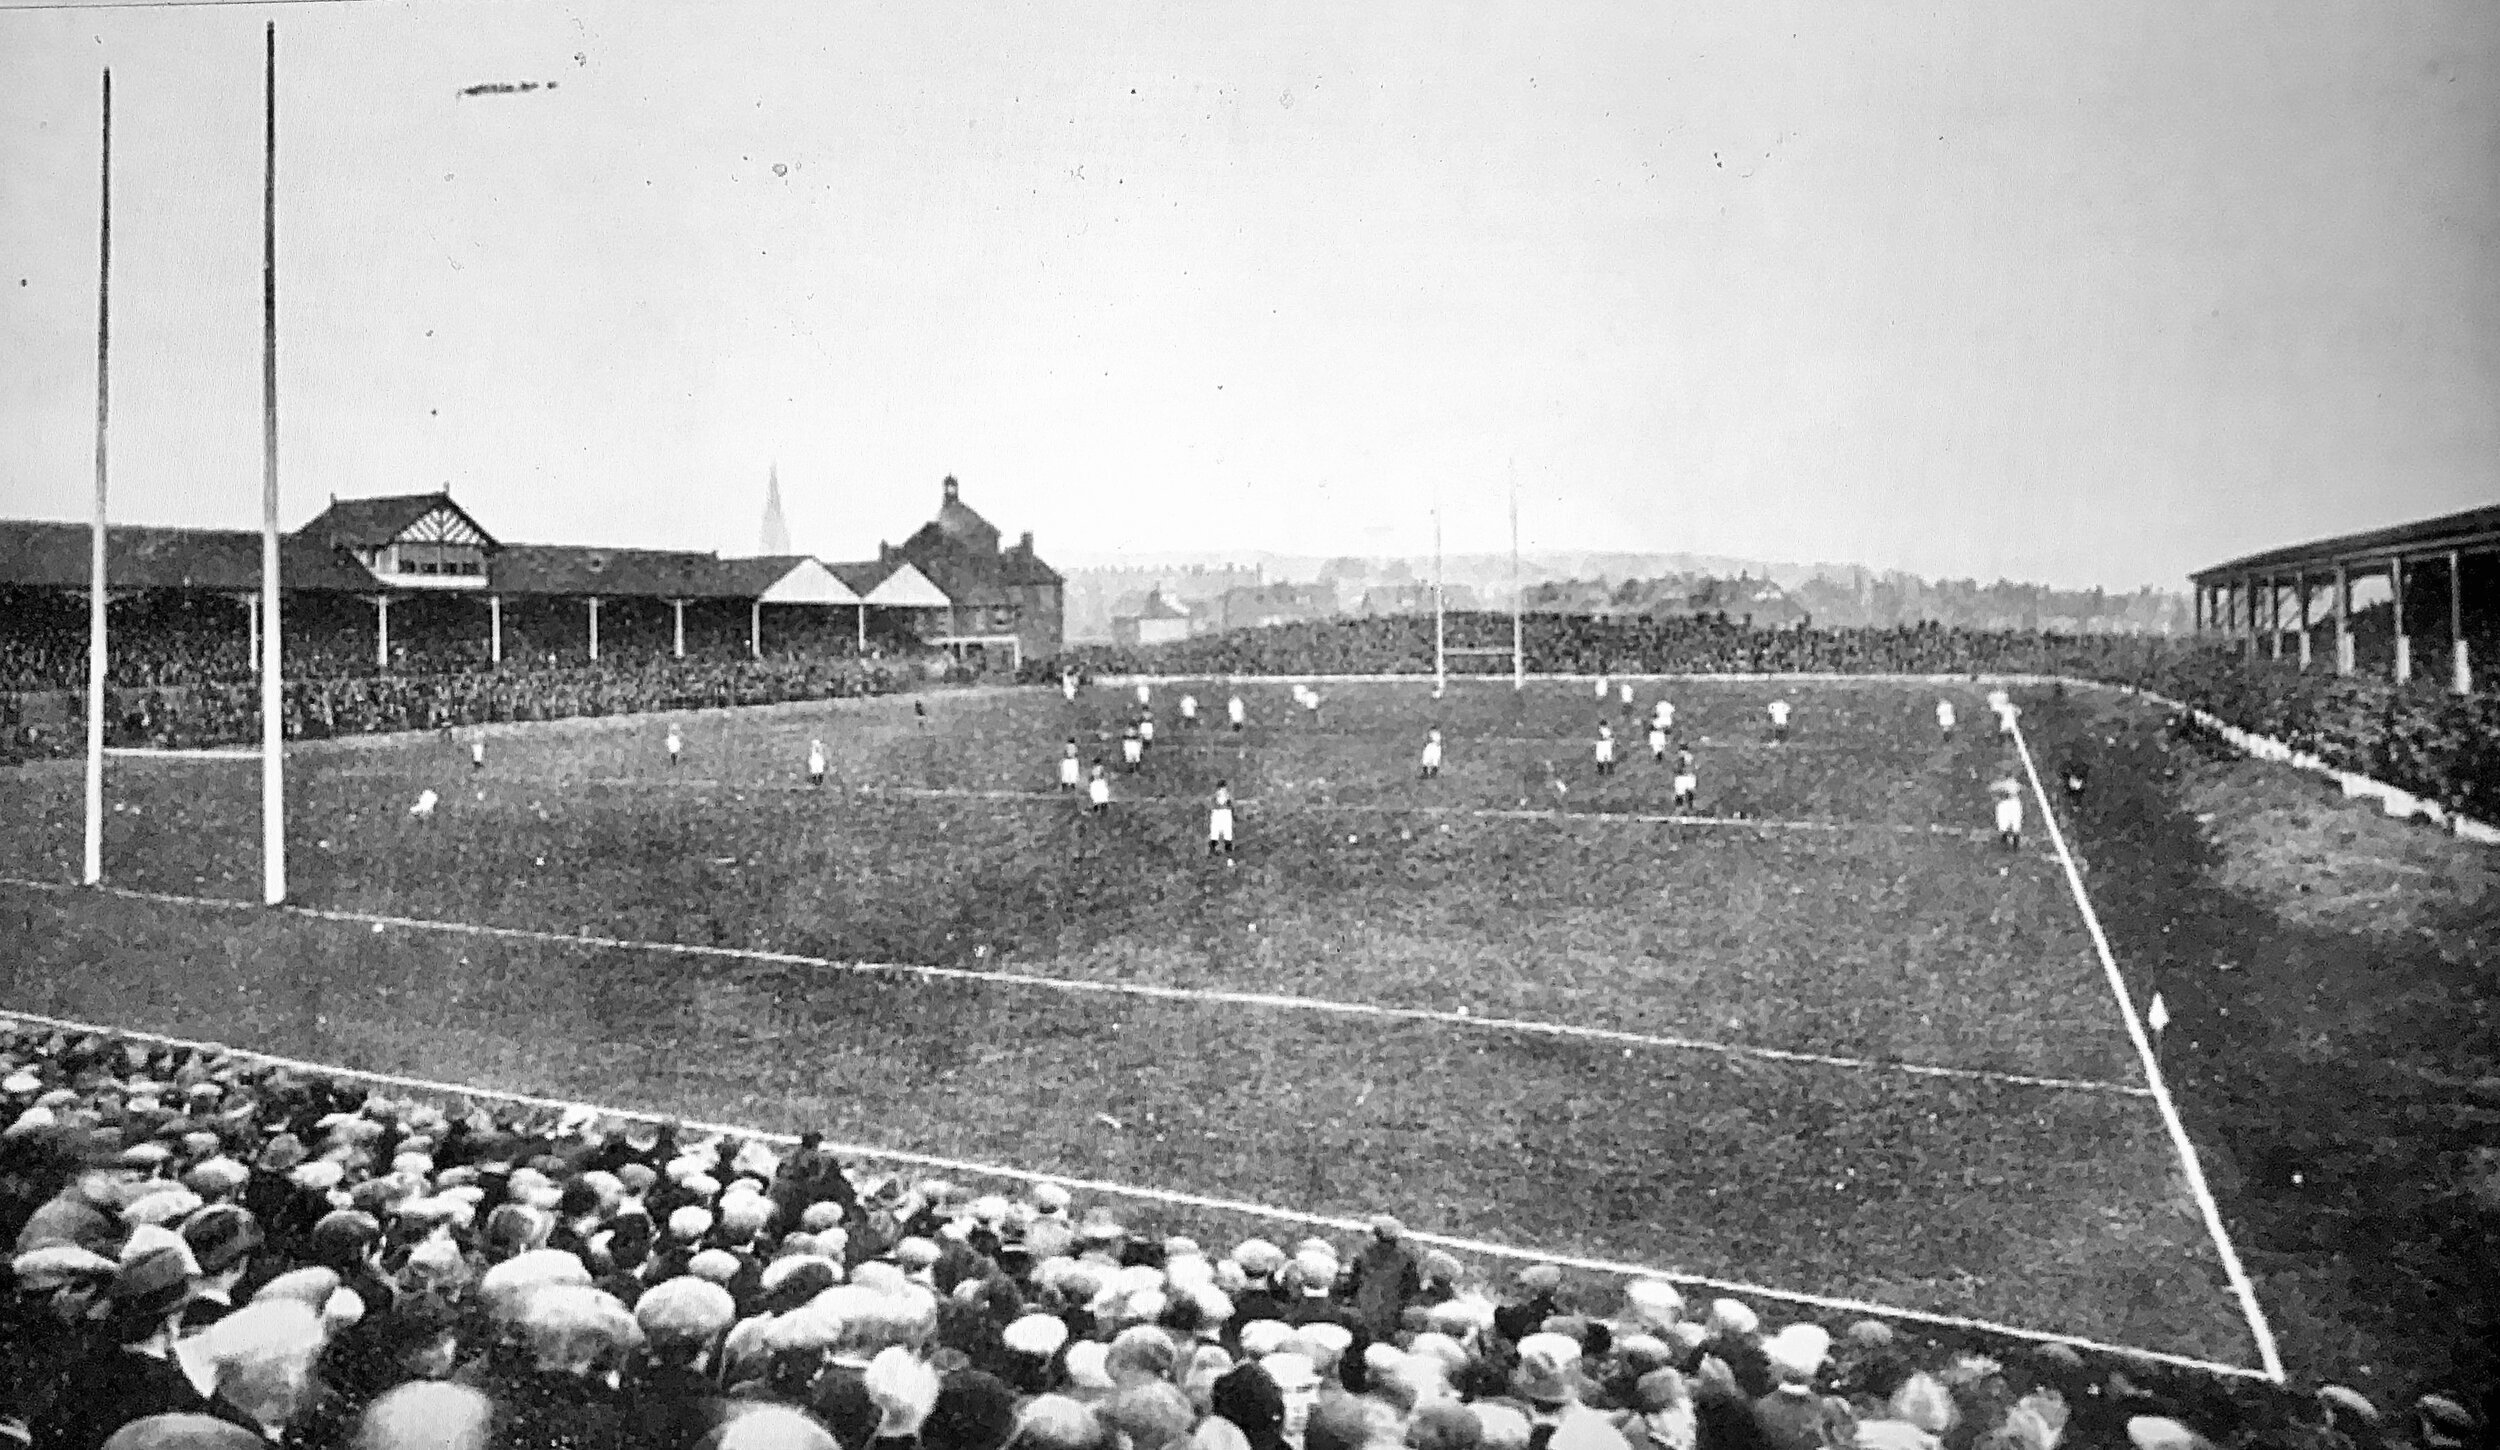 Headingley Rugby Football Ground, early 1900s